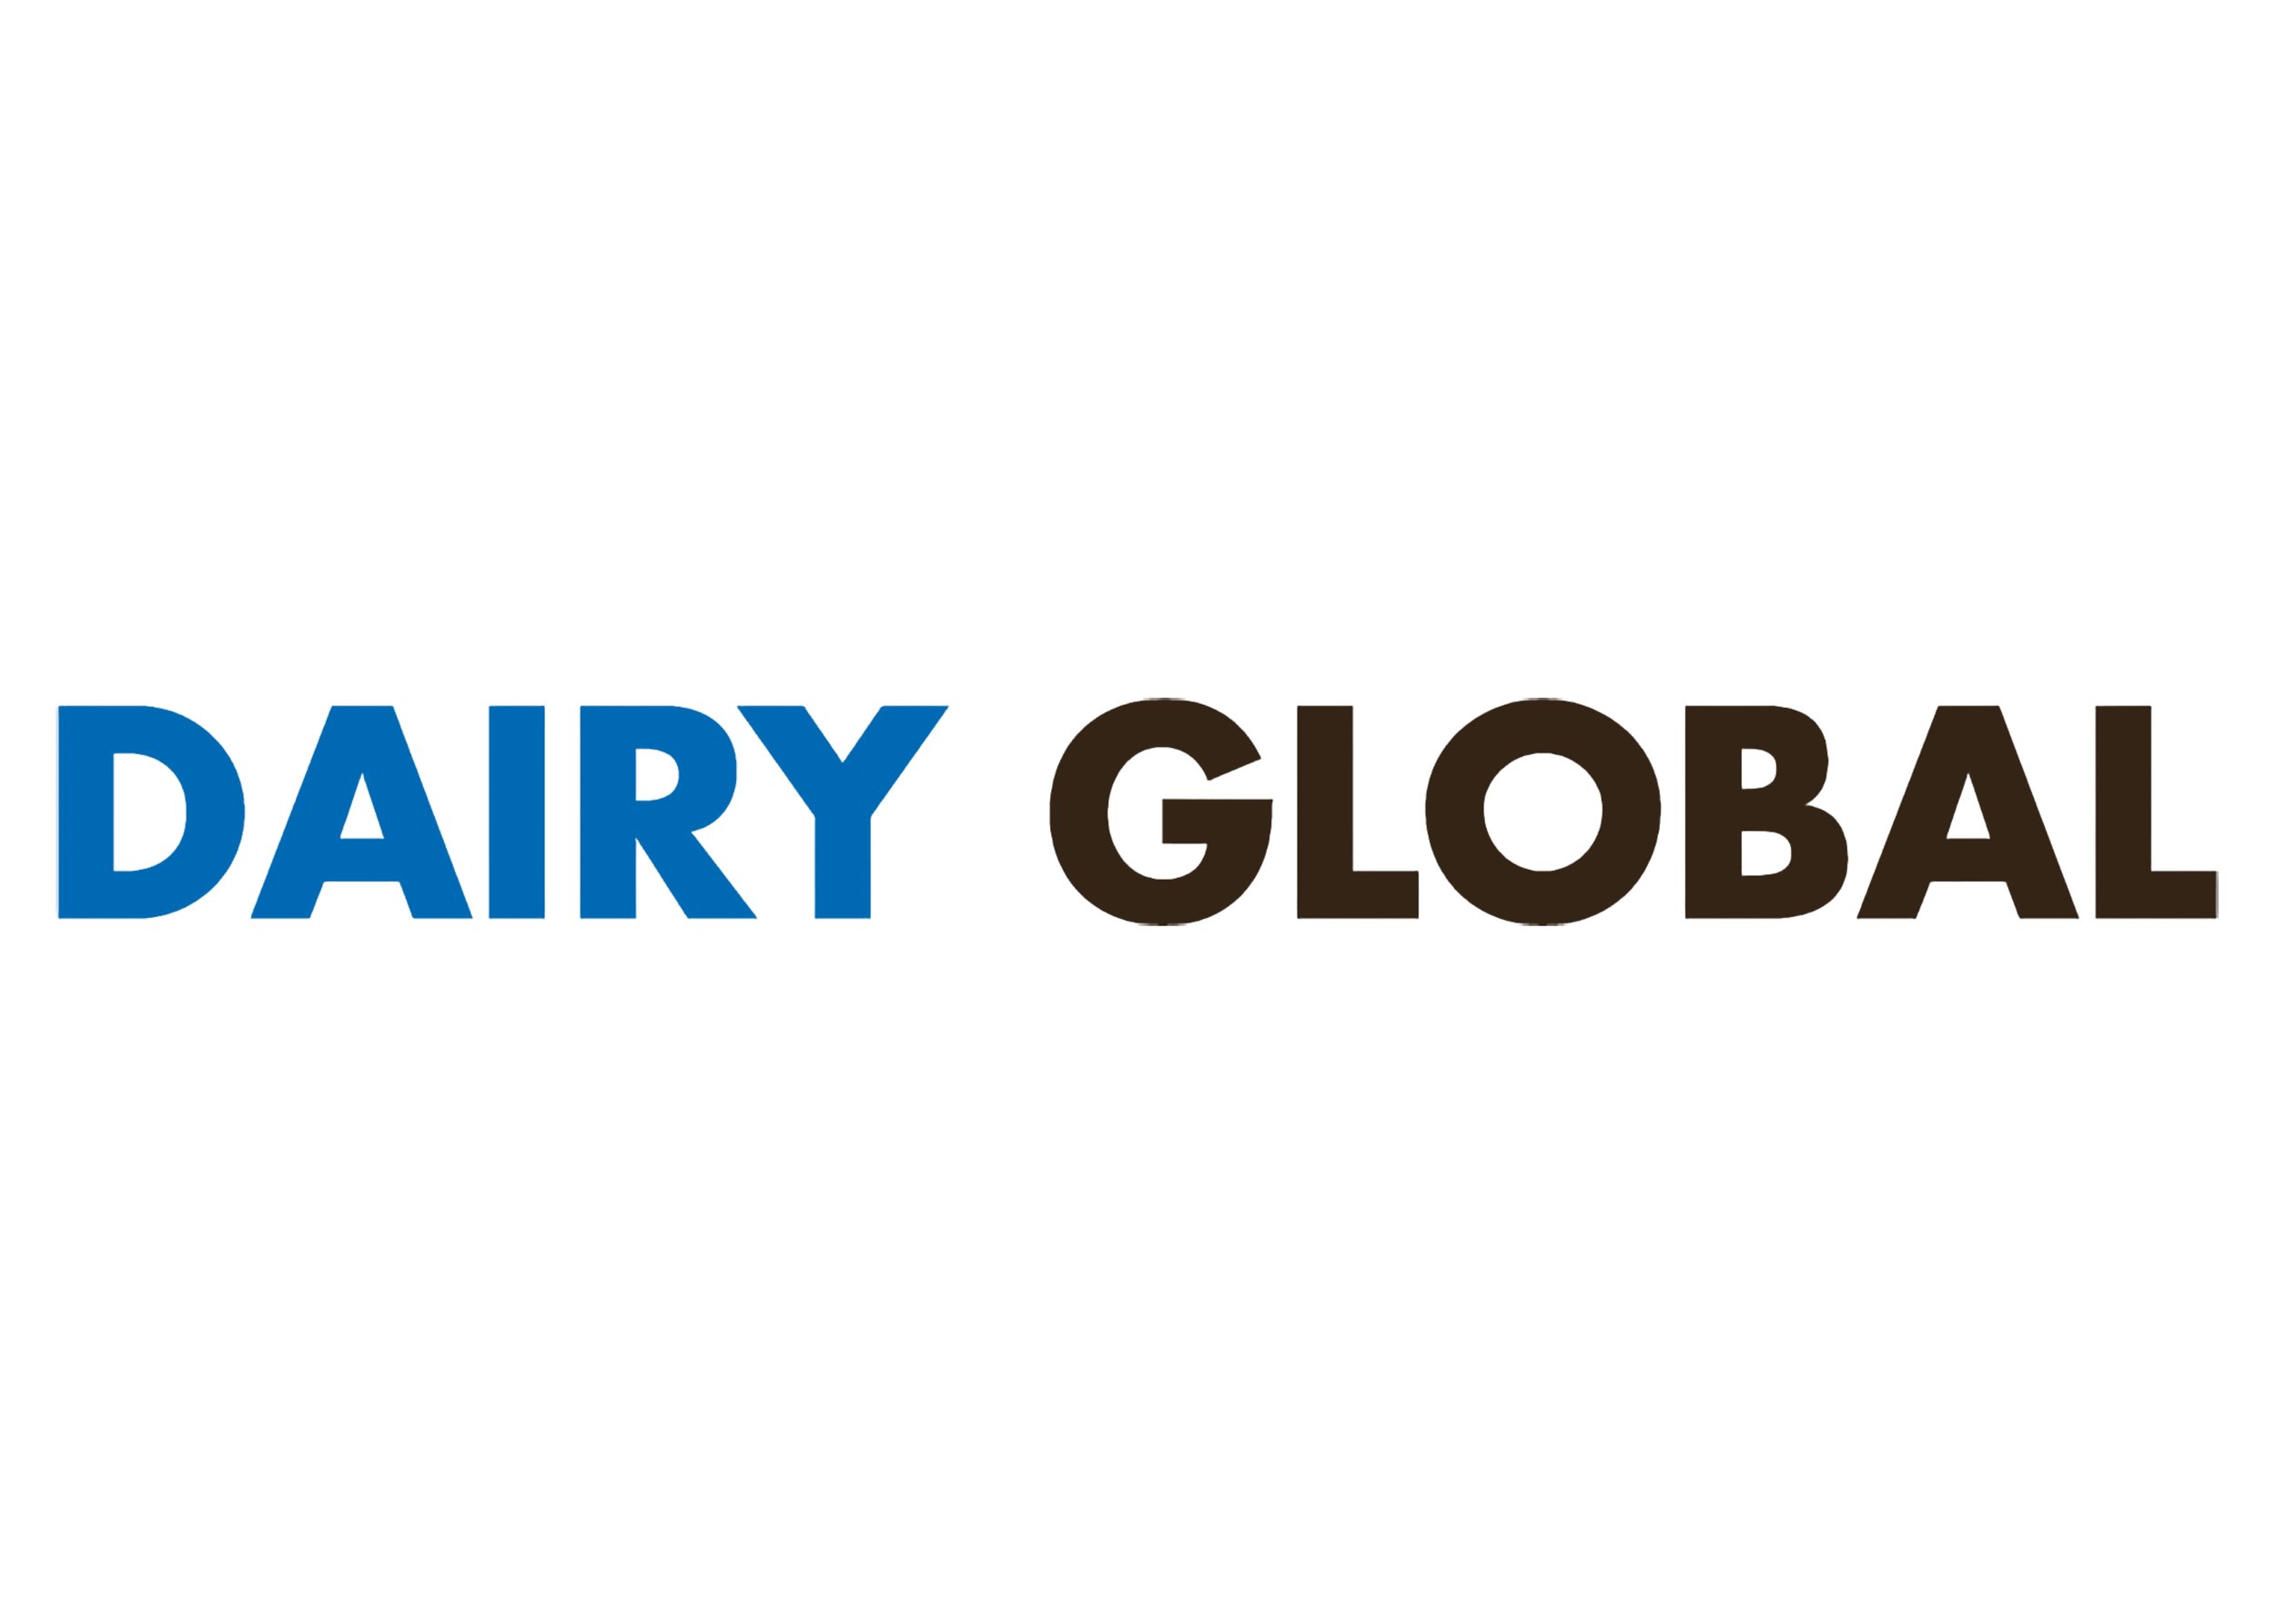 Dairy Global logo blog.jpg